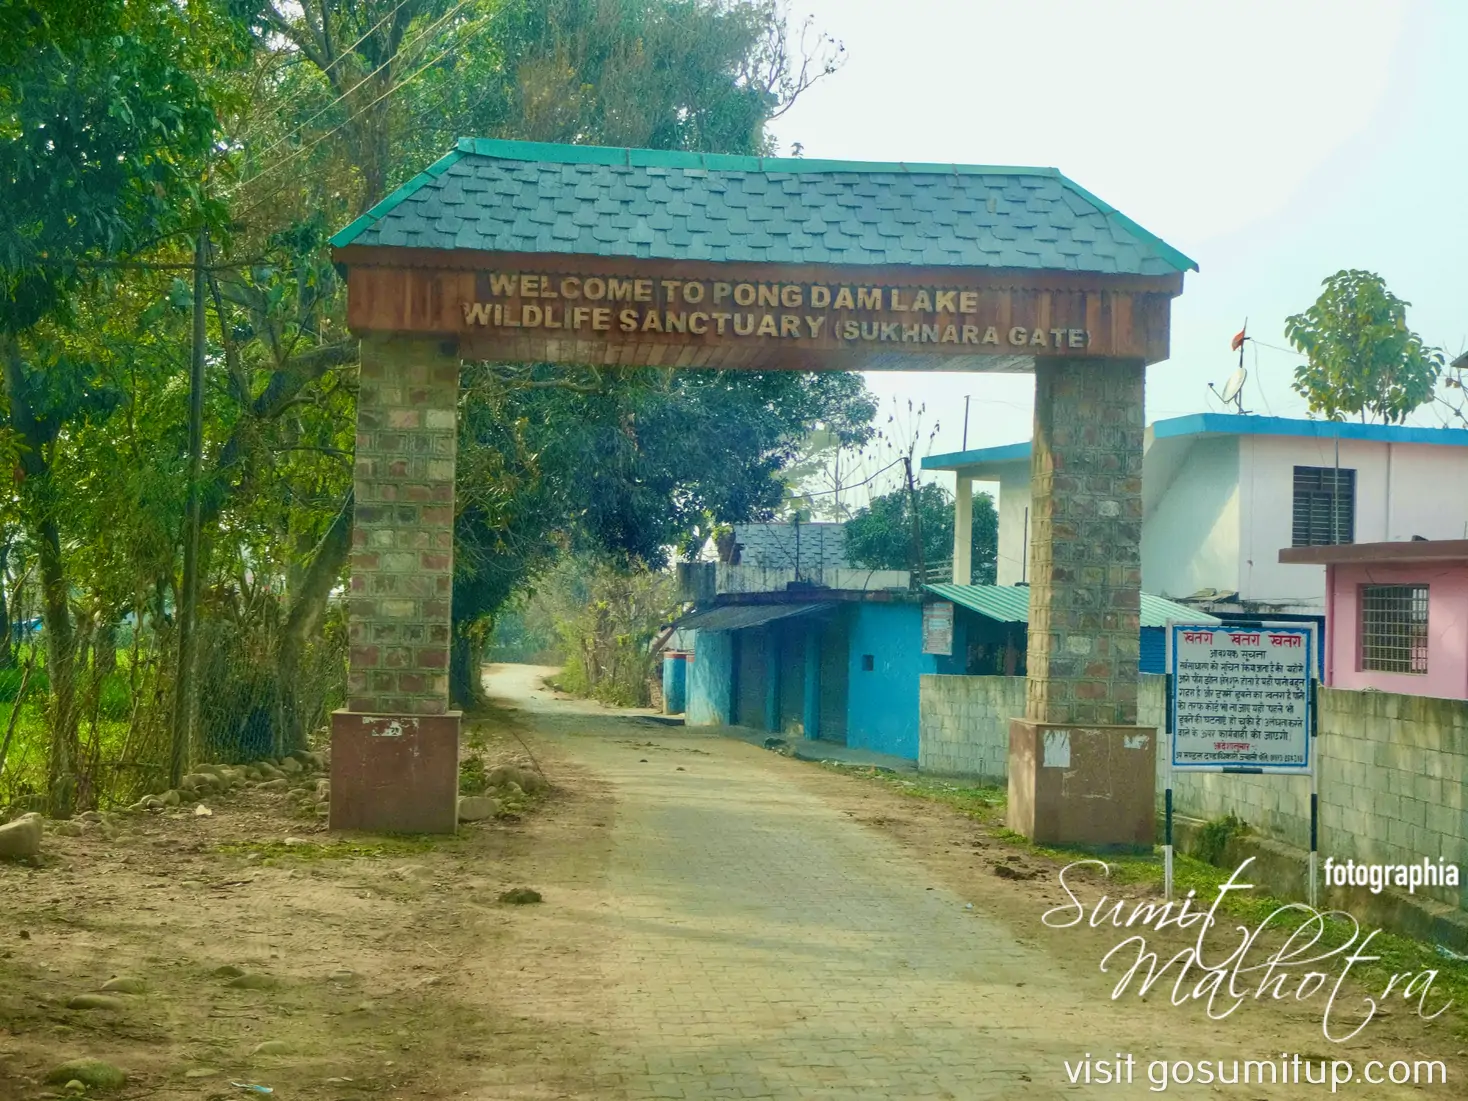 Entrance gate to maharana pratap sagar, also known as pong reservoir or pong dam lake